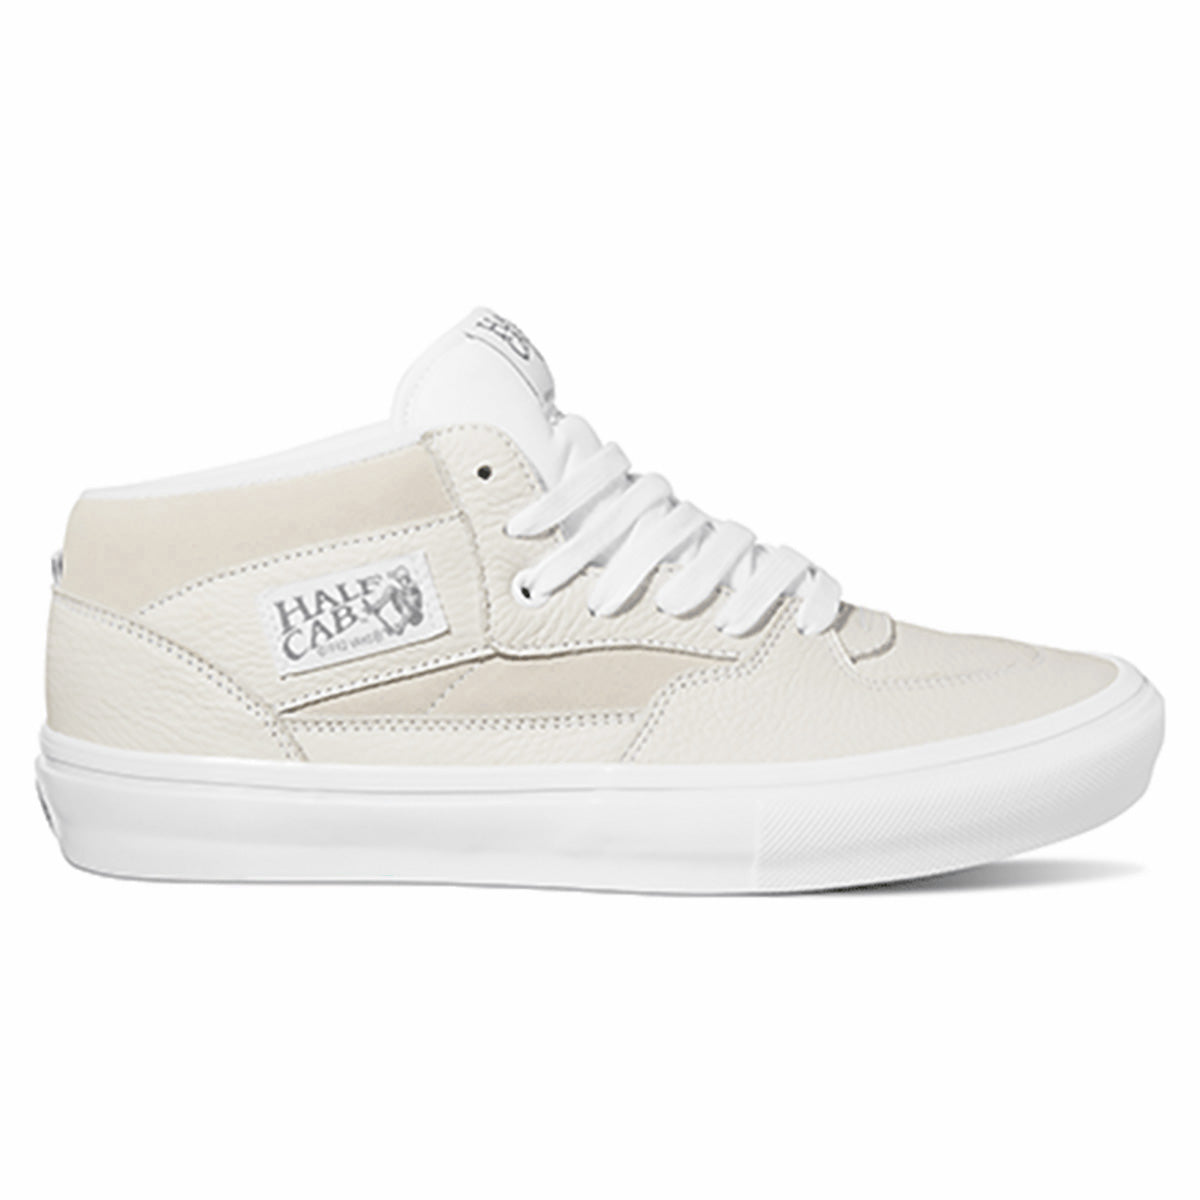 Vans Daz Skate Half Cab Skateboard Shoe - White/White